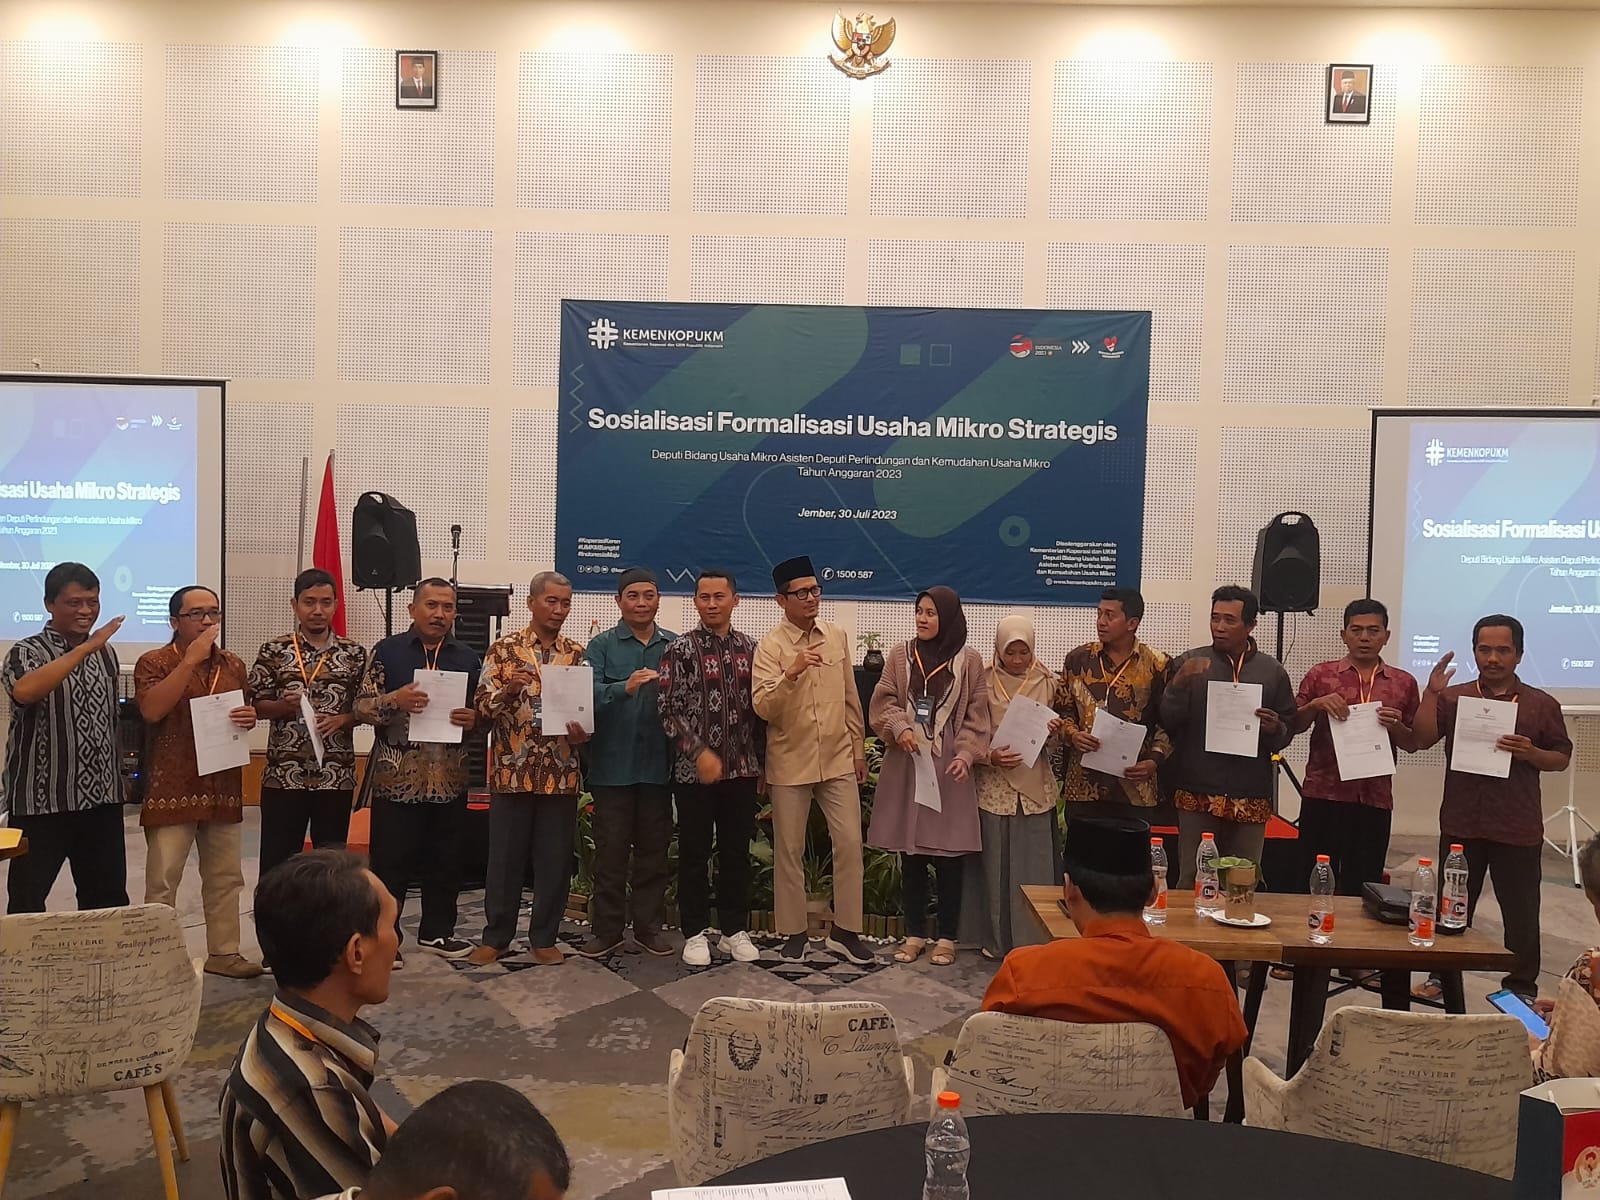 Gandeng Kemenkop, Amin, Ak, MM, Anggota Komisi VI DPR-RI Sosialisasikan Legalitas Usaha Di Kabupaten Jember 